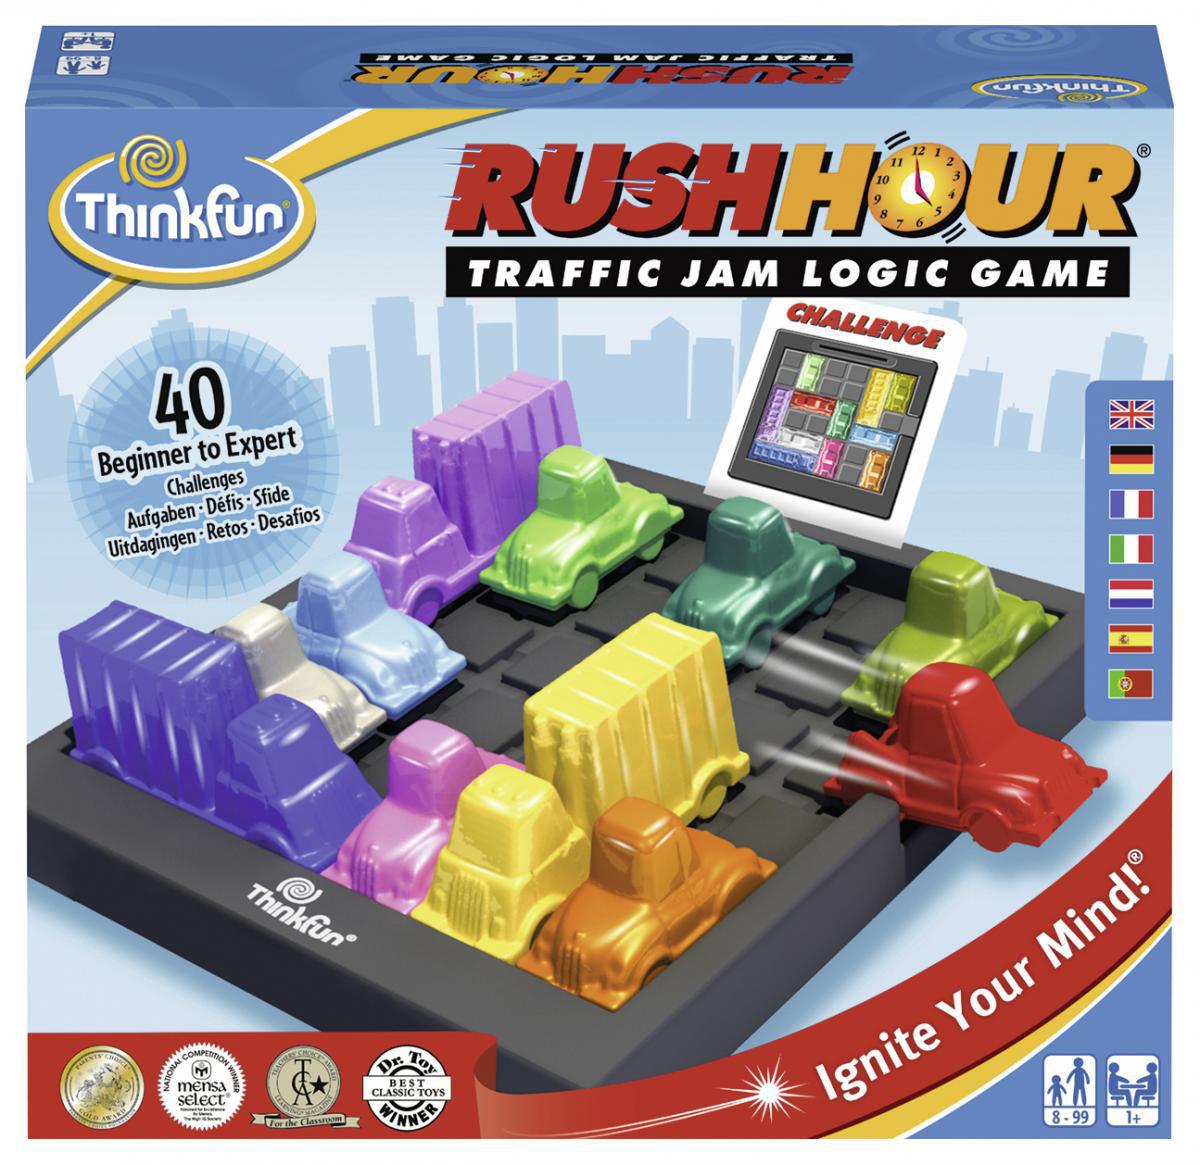  Rush Hour: Traffic Jam Logic Game 